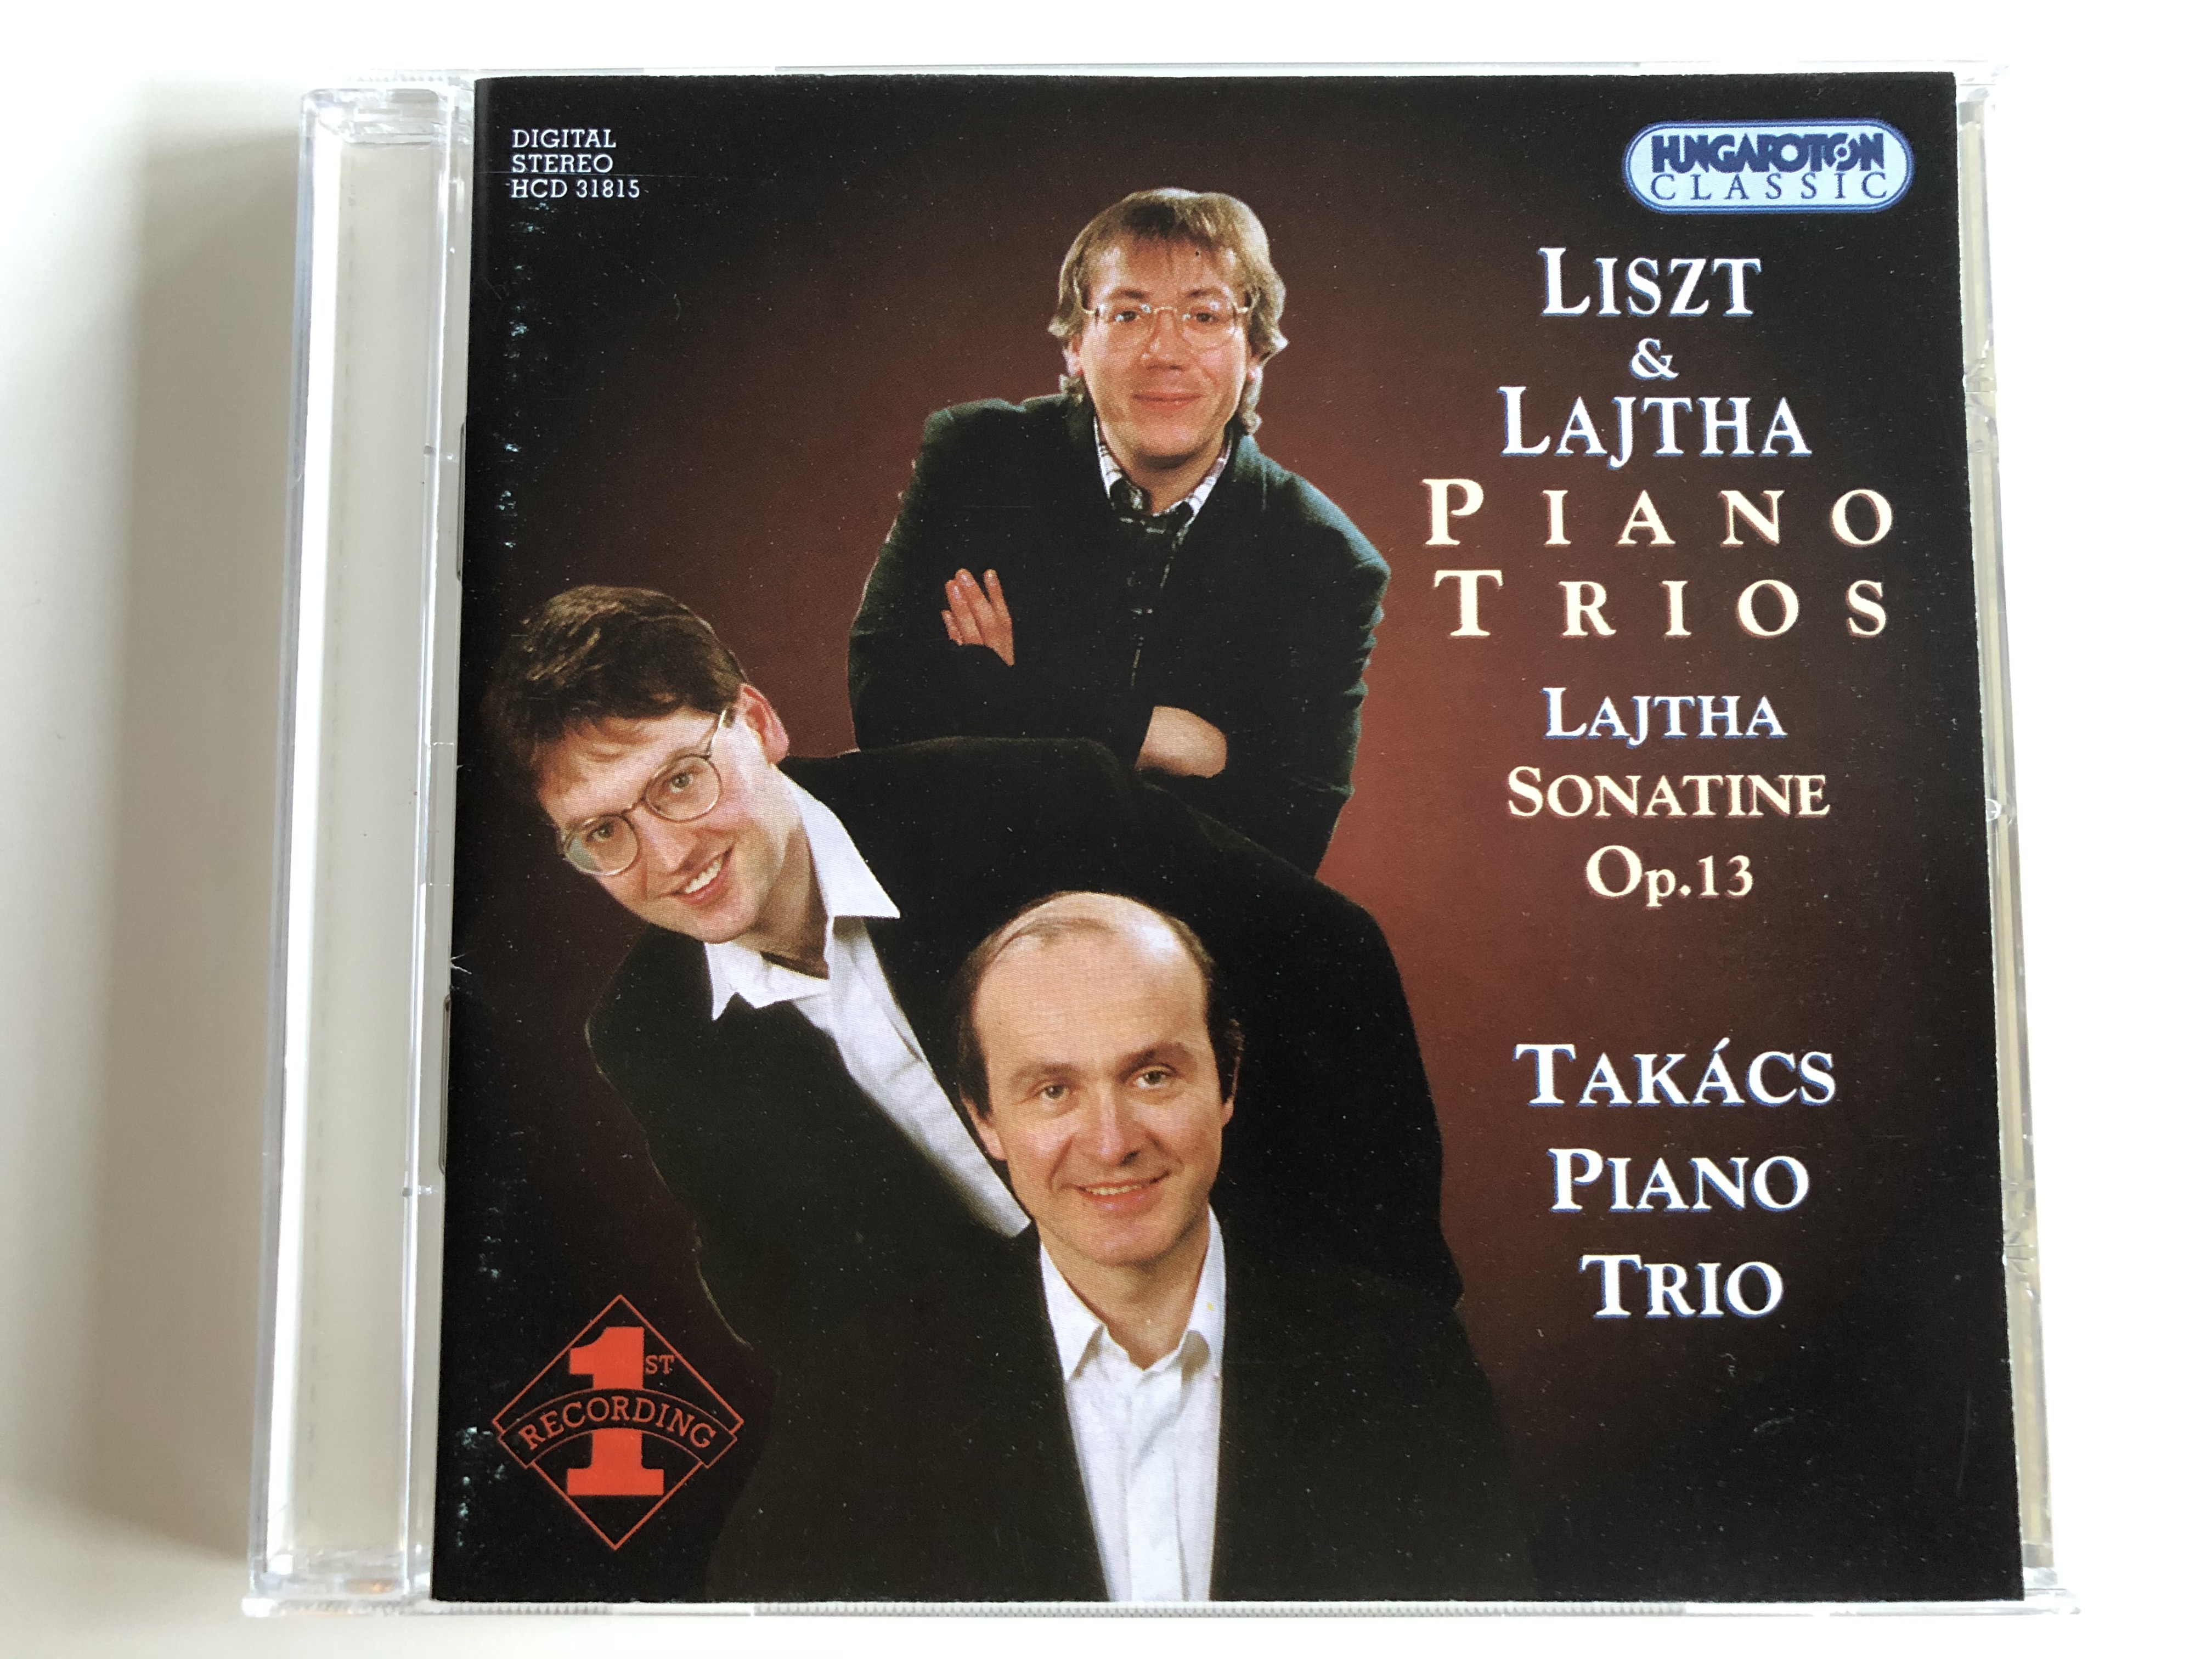 liszt-lajtha-piano-trios-lajtha-sonatine-op.-13-takacs-piano-trio-hungaroton-classic-audio-cd-1999-stereo-hcd-31815-1-.jpg